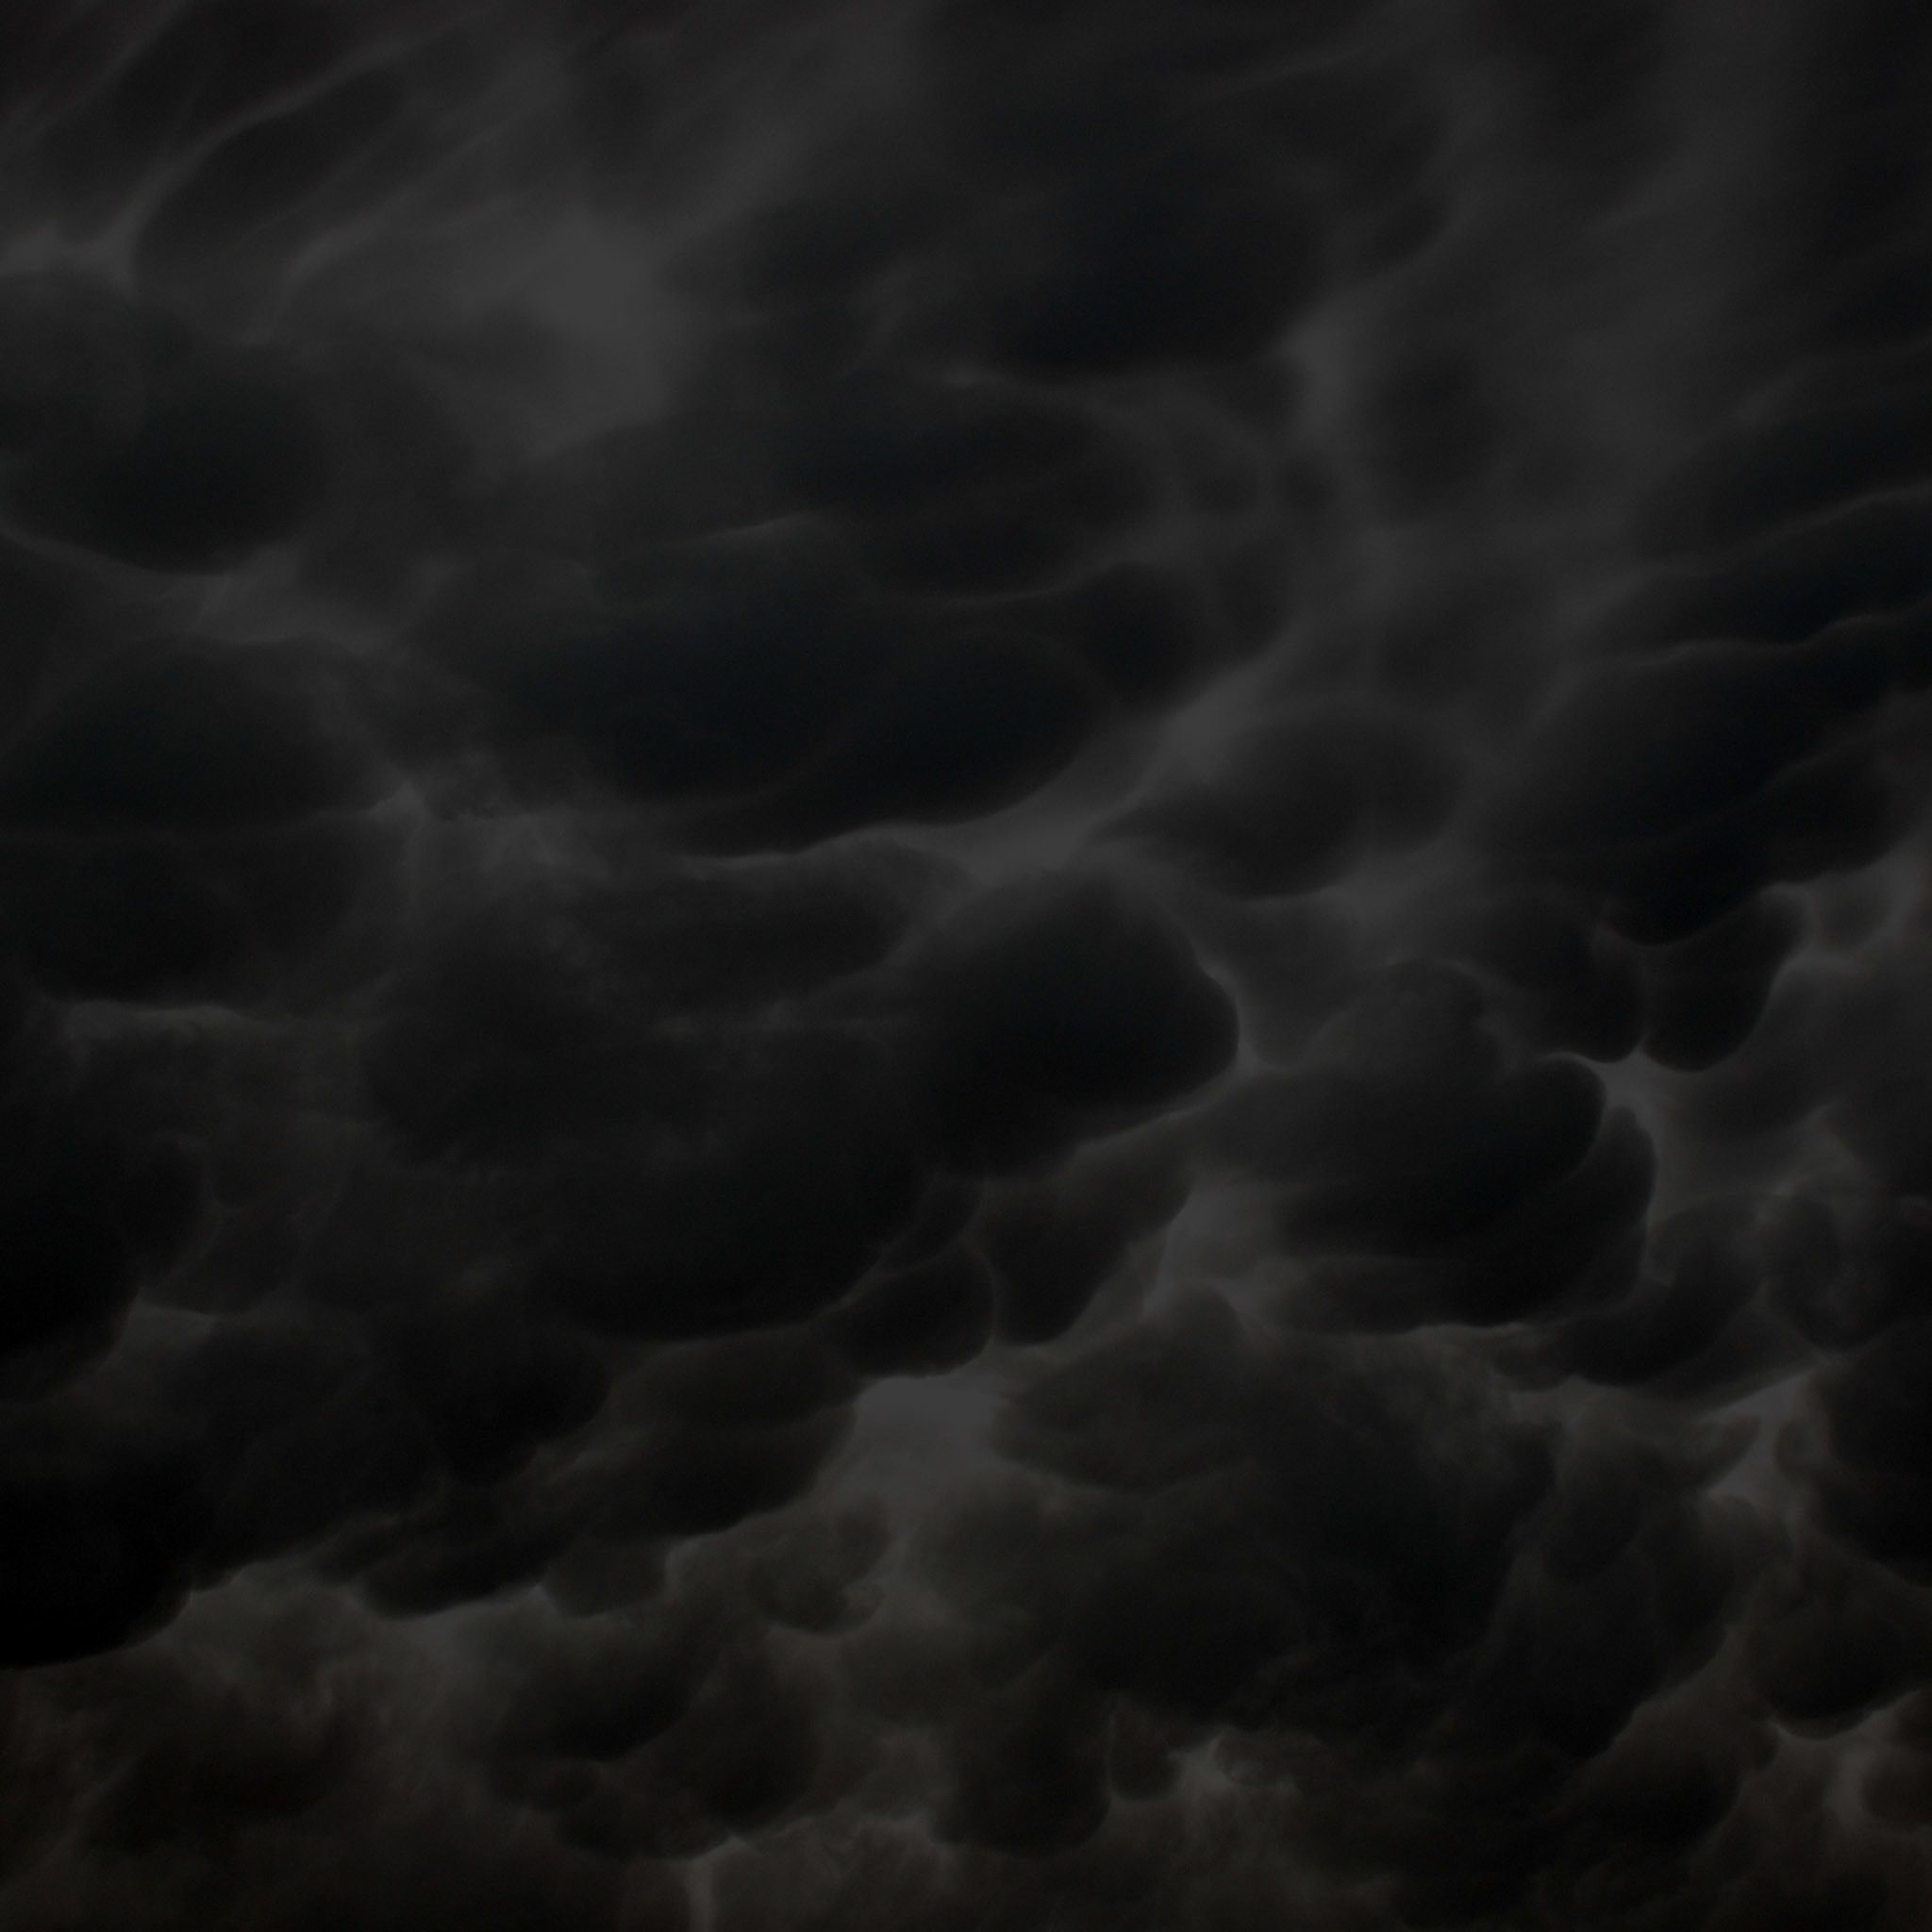 Black Cloud Wallpapers